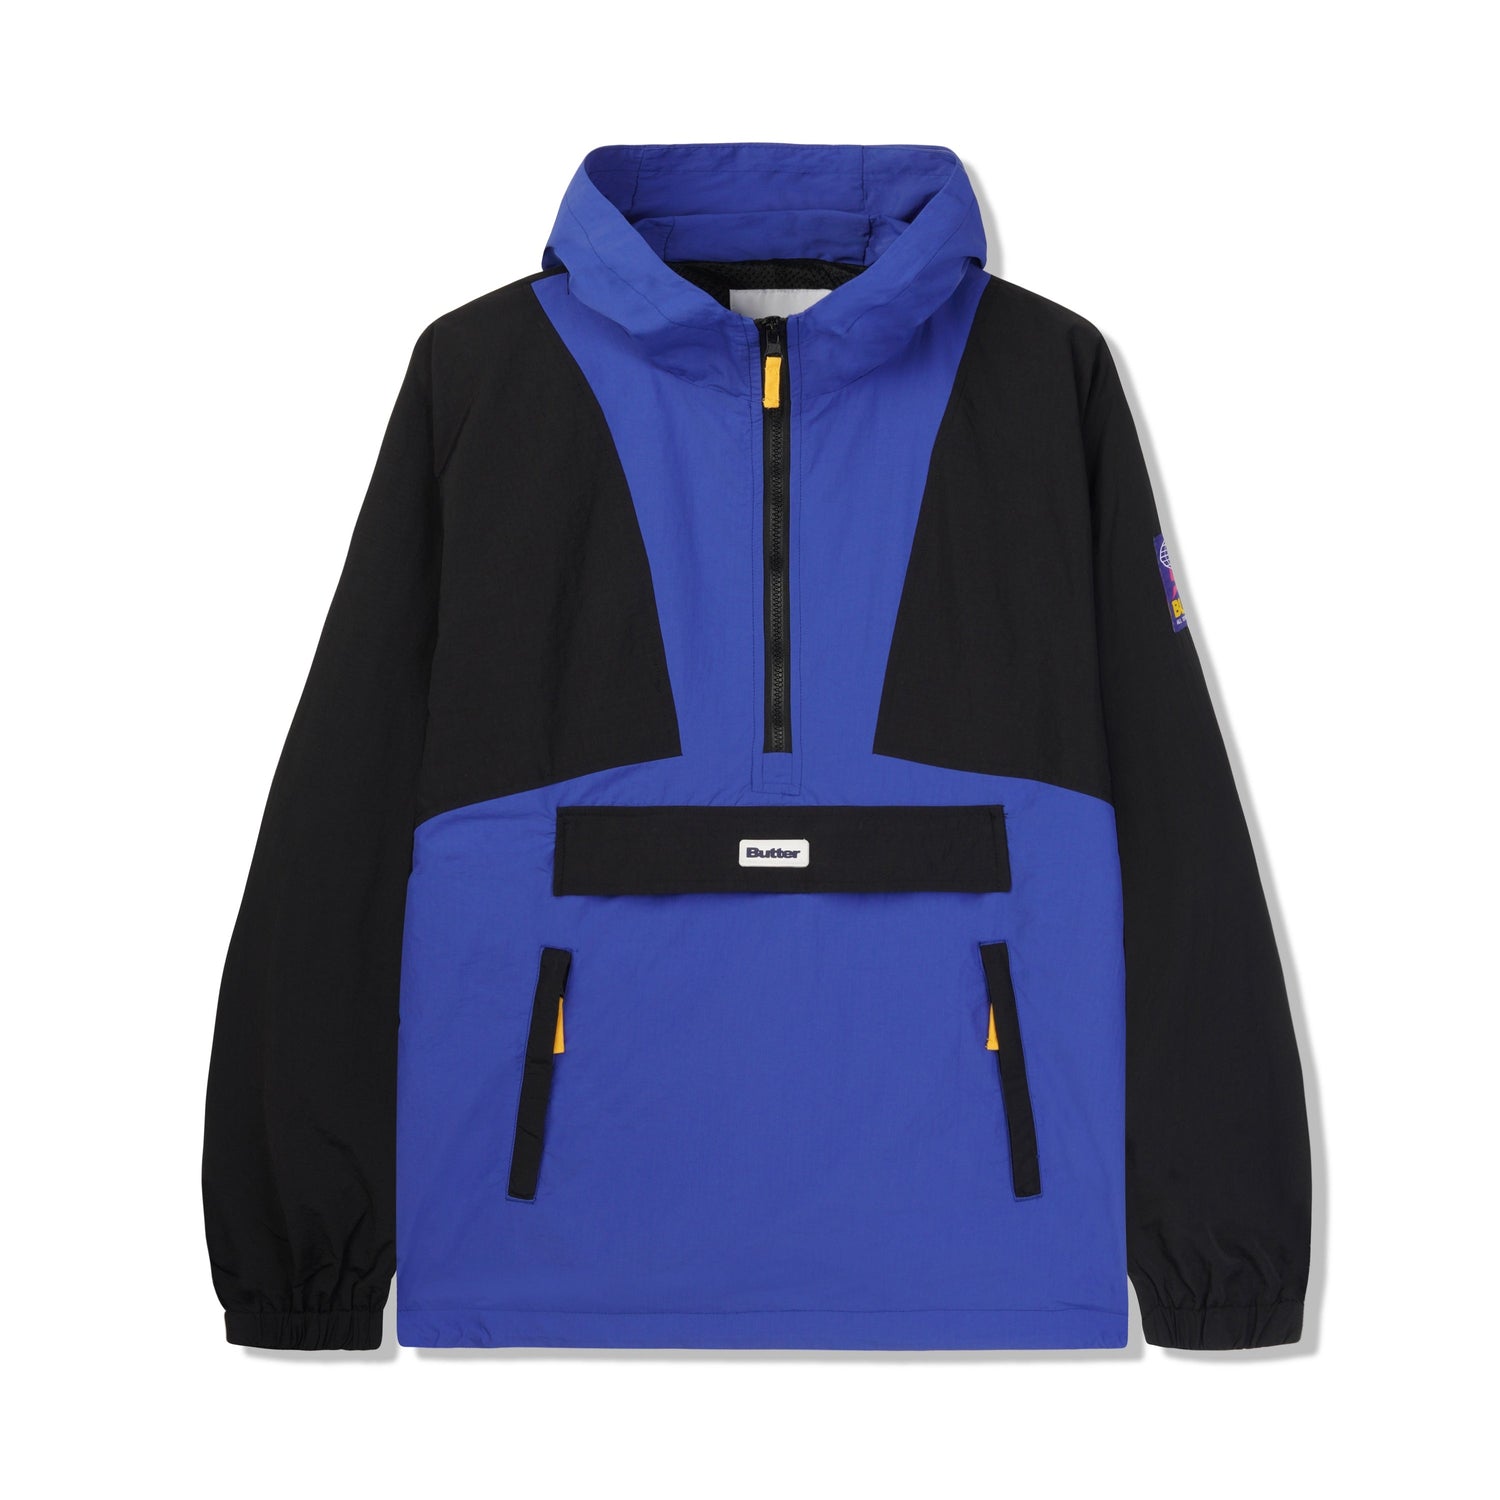 Terrain Jacket, Black / Royal Blue